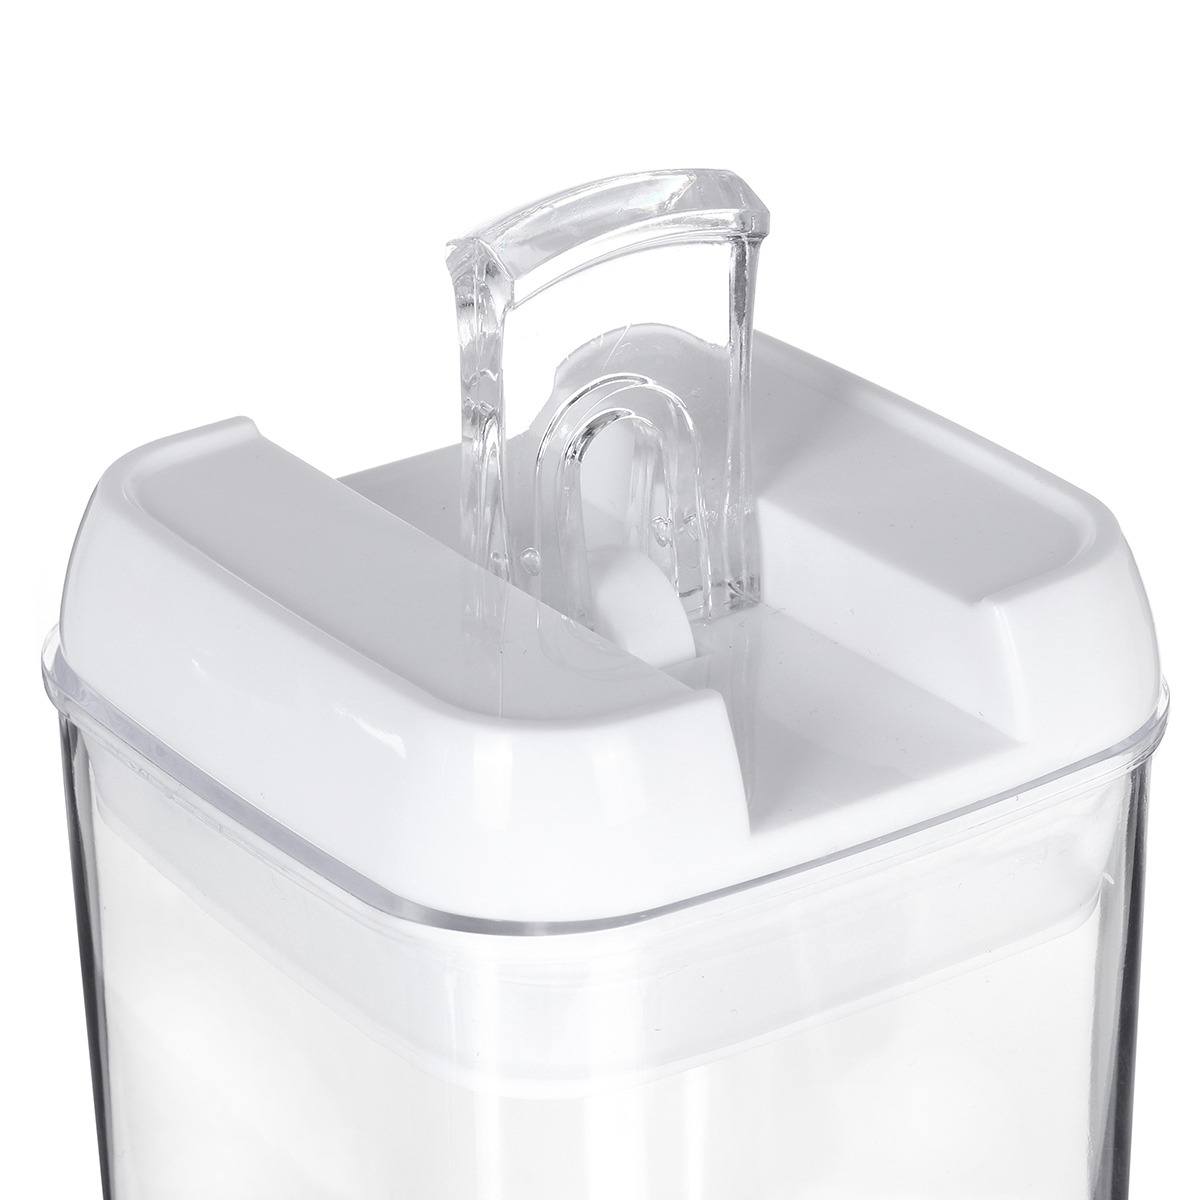 6pcs-Airtight-Refrigerator-Food-Container-Storage-with-Lock-Lids-Plastic-Transparent-Multigrain-Cont-1752734-15